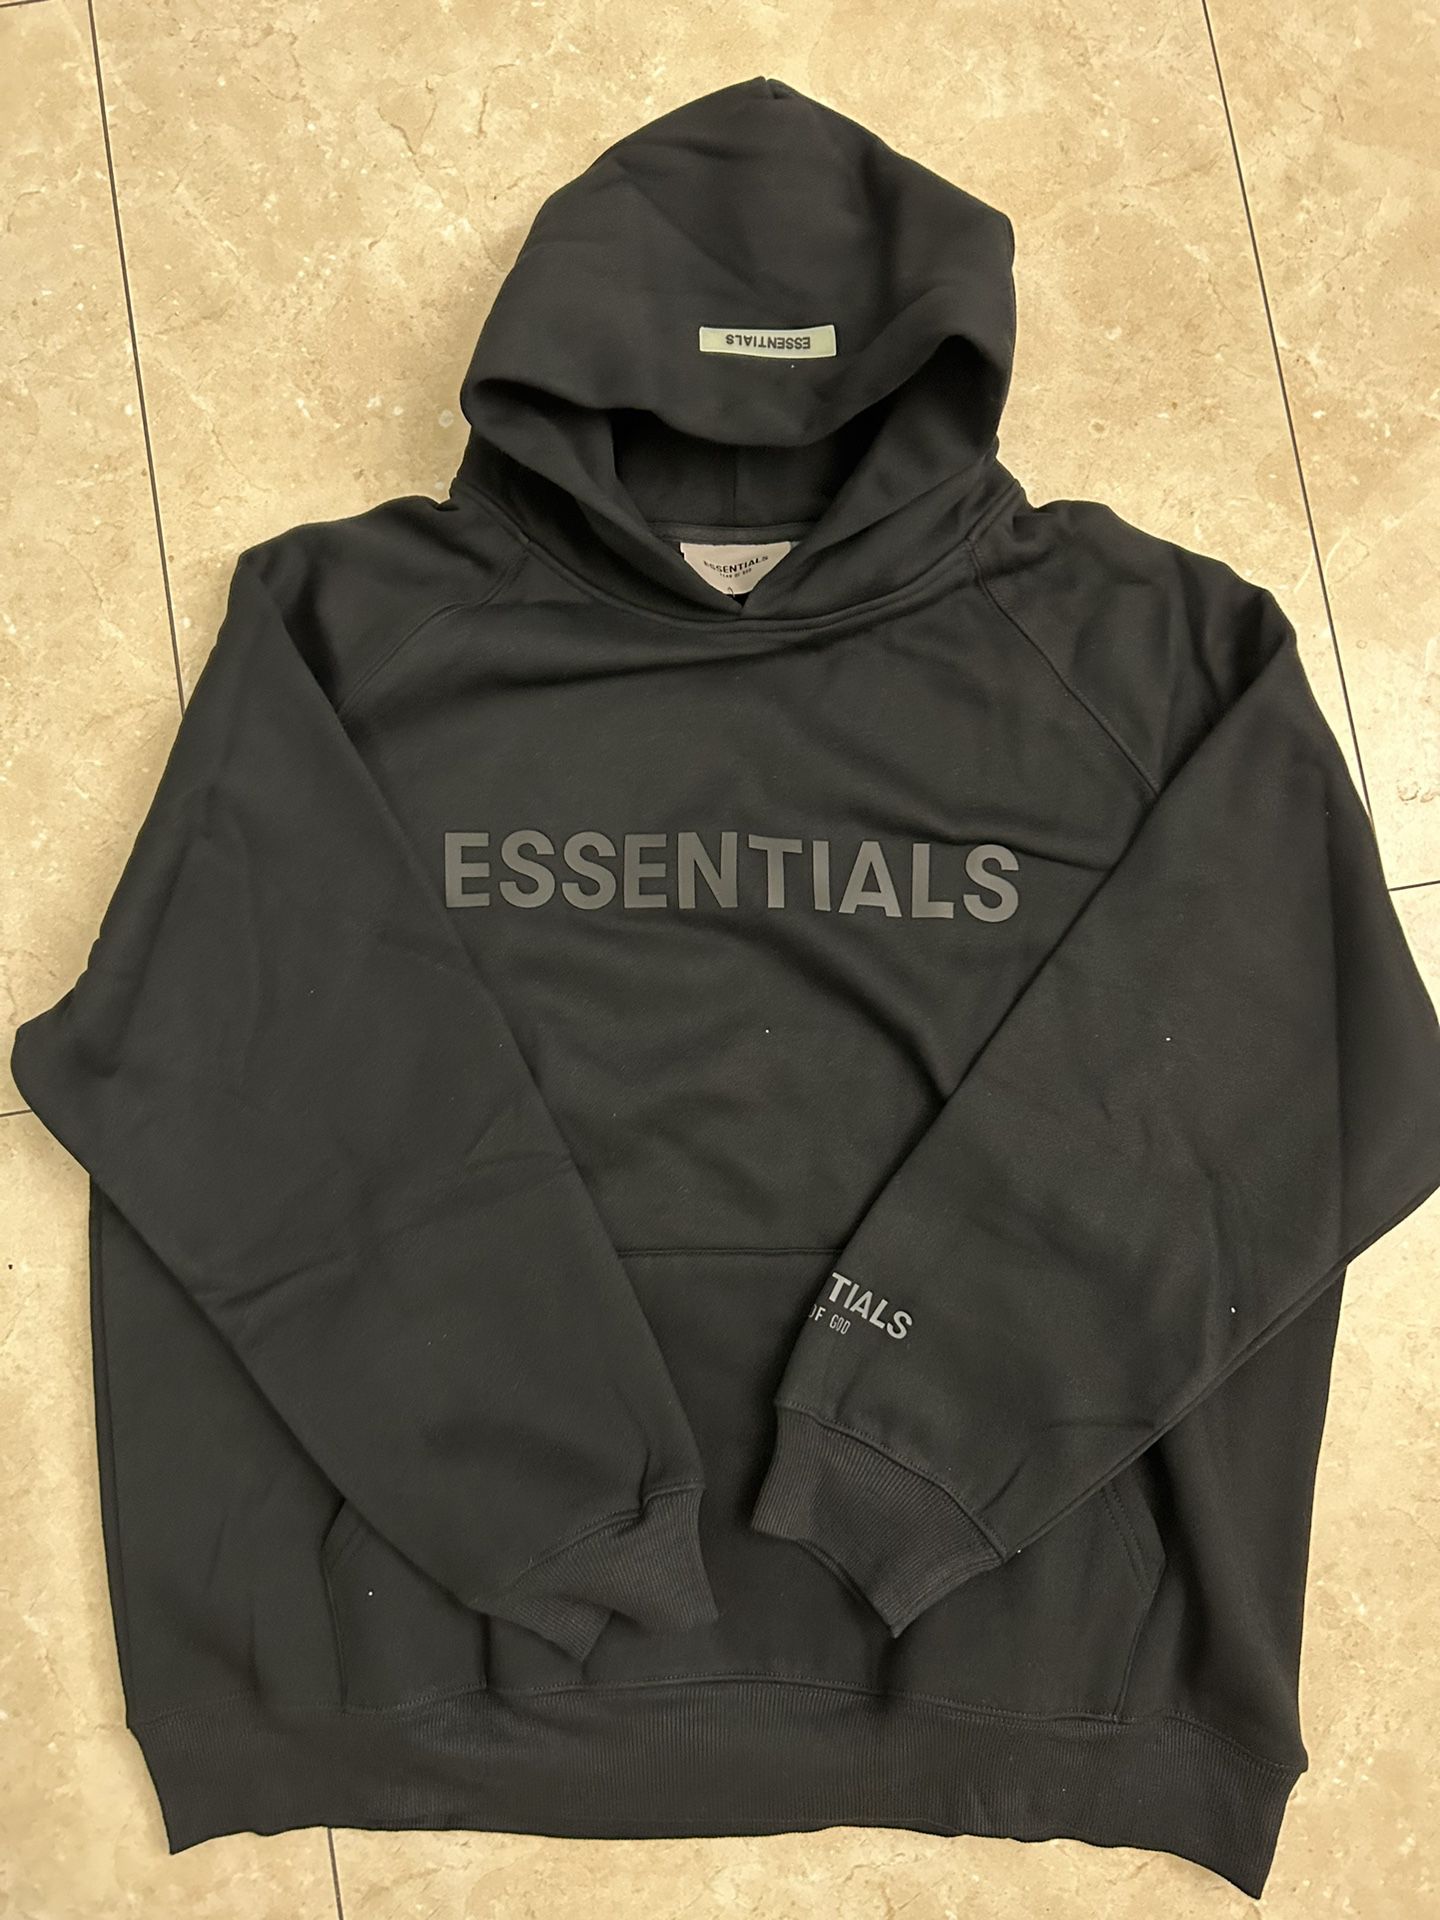 Black Essential Hoodie - Size Medium